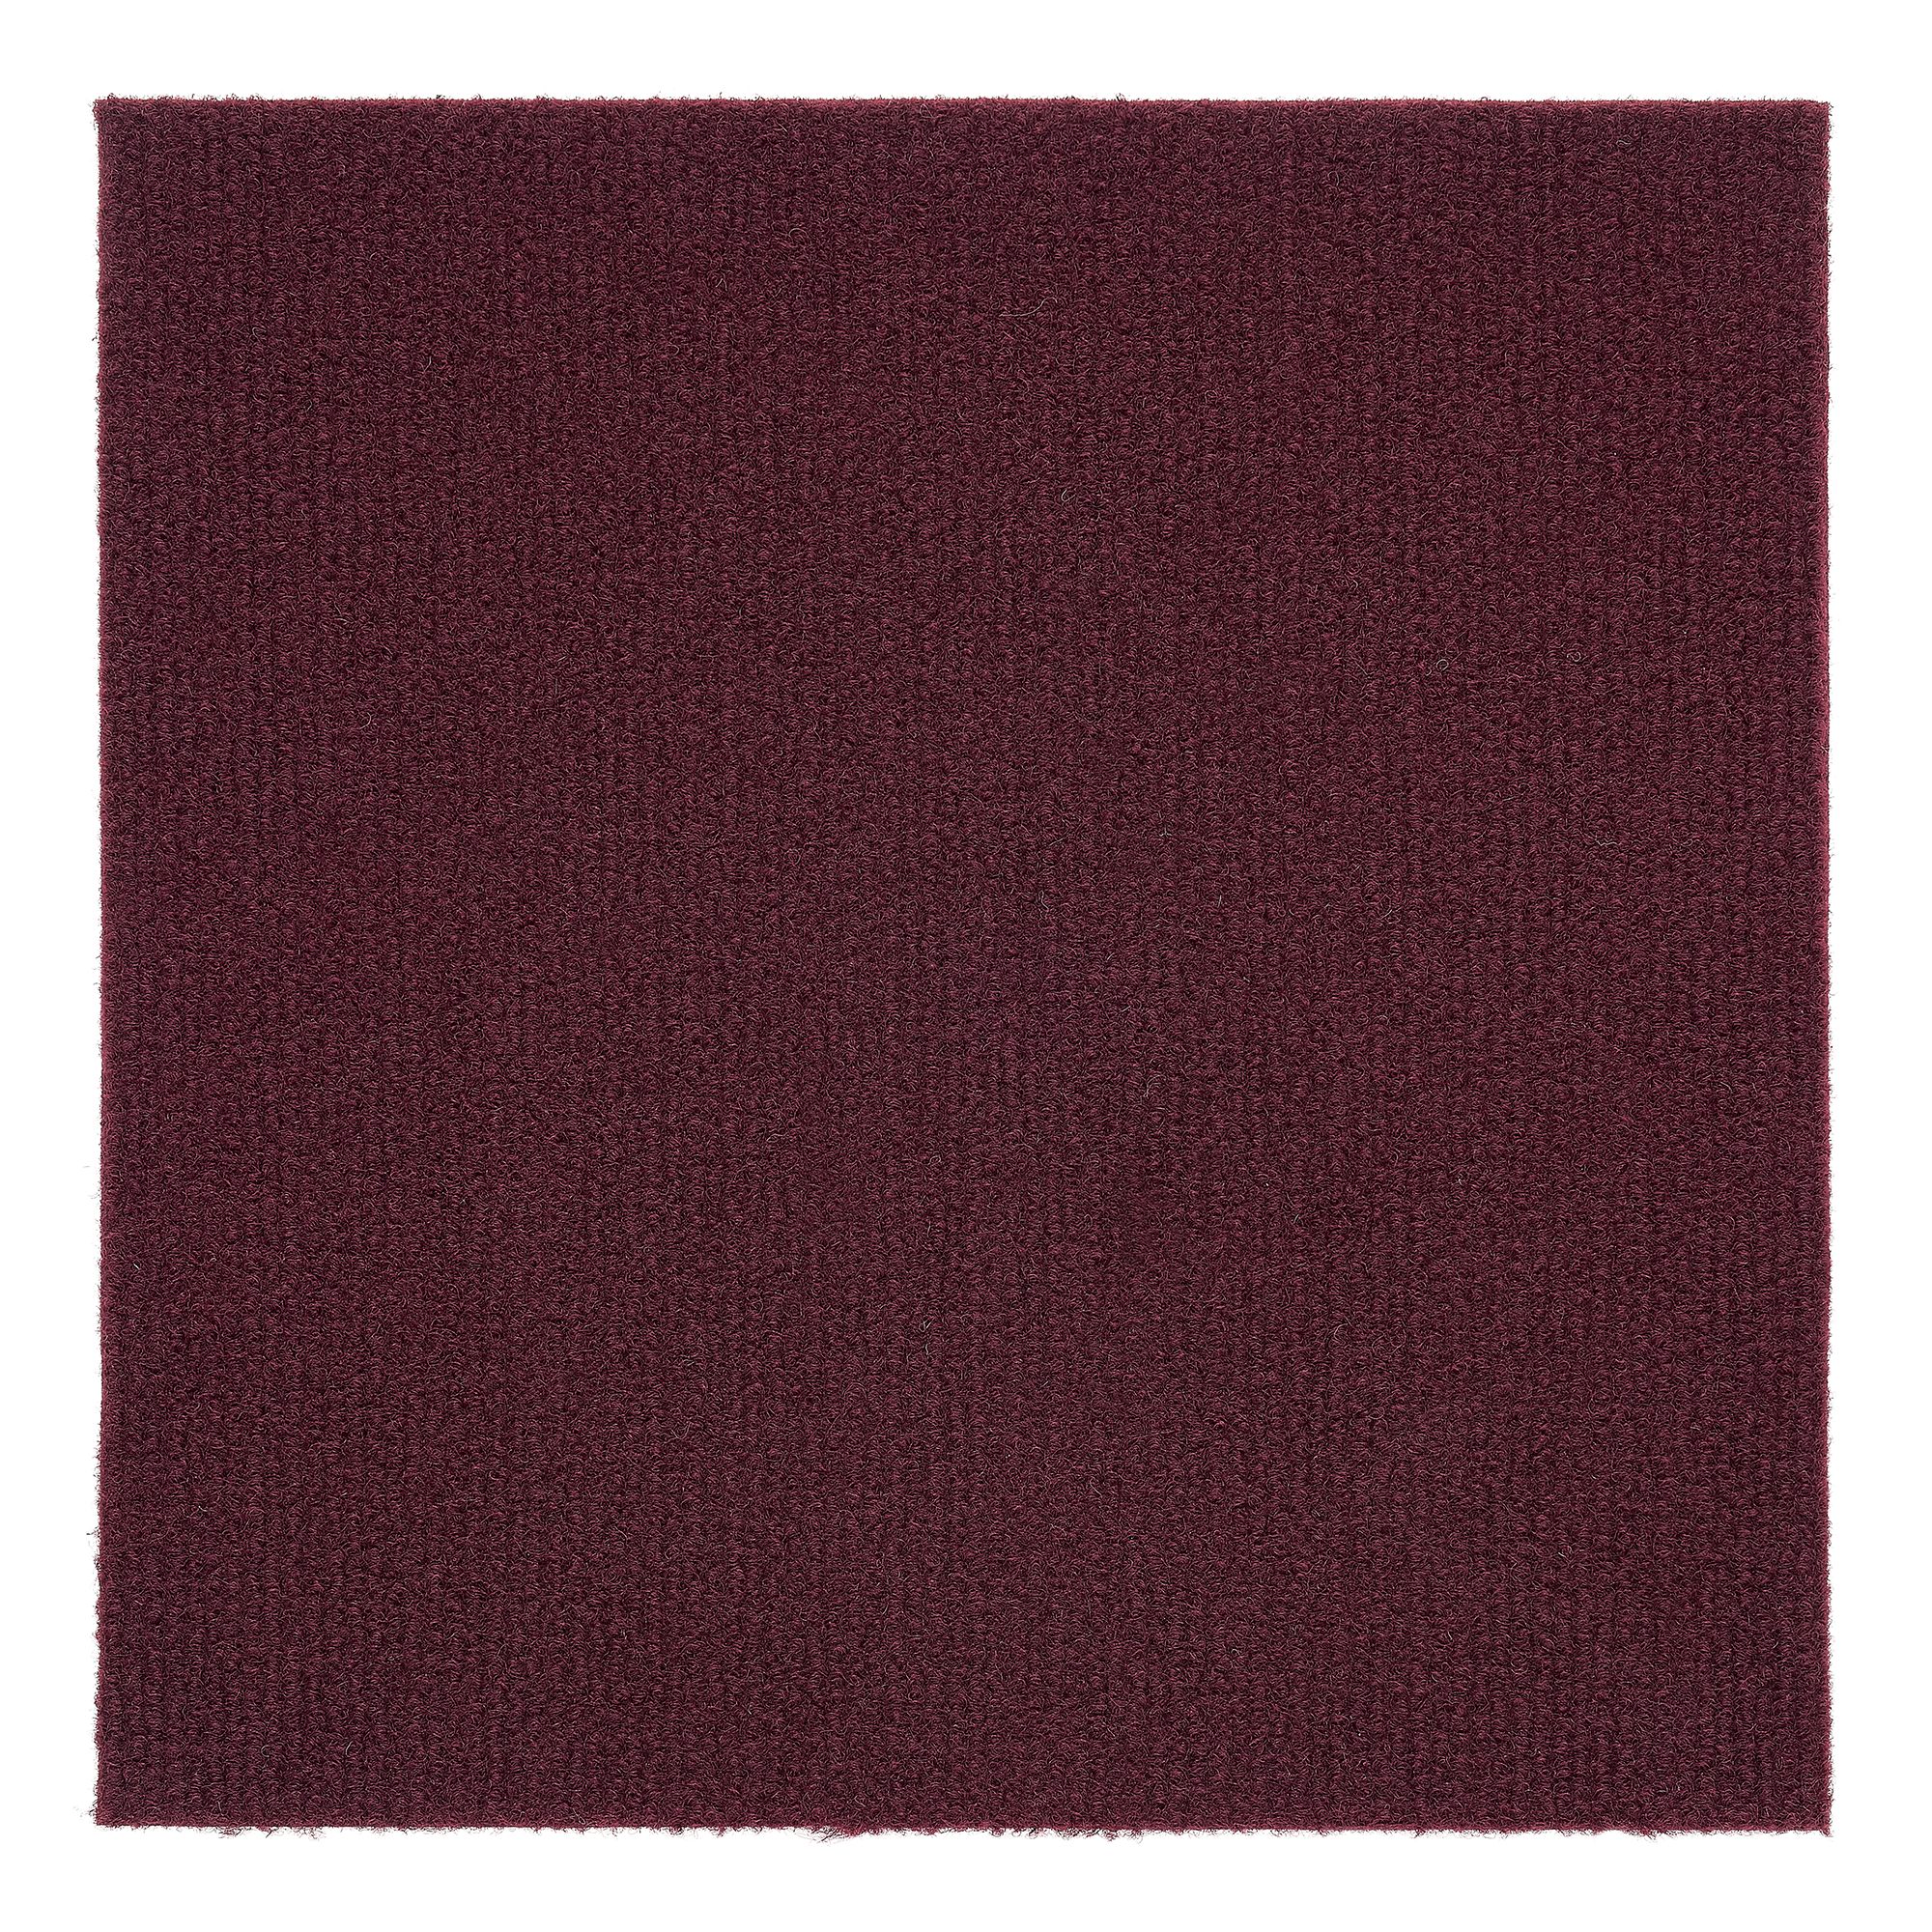 Carpet Tiles, Solid Color Expansion Pack, 12 x 12, 4 Count - PACAC4355, Dixon Ticonderoga Co - Pacon